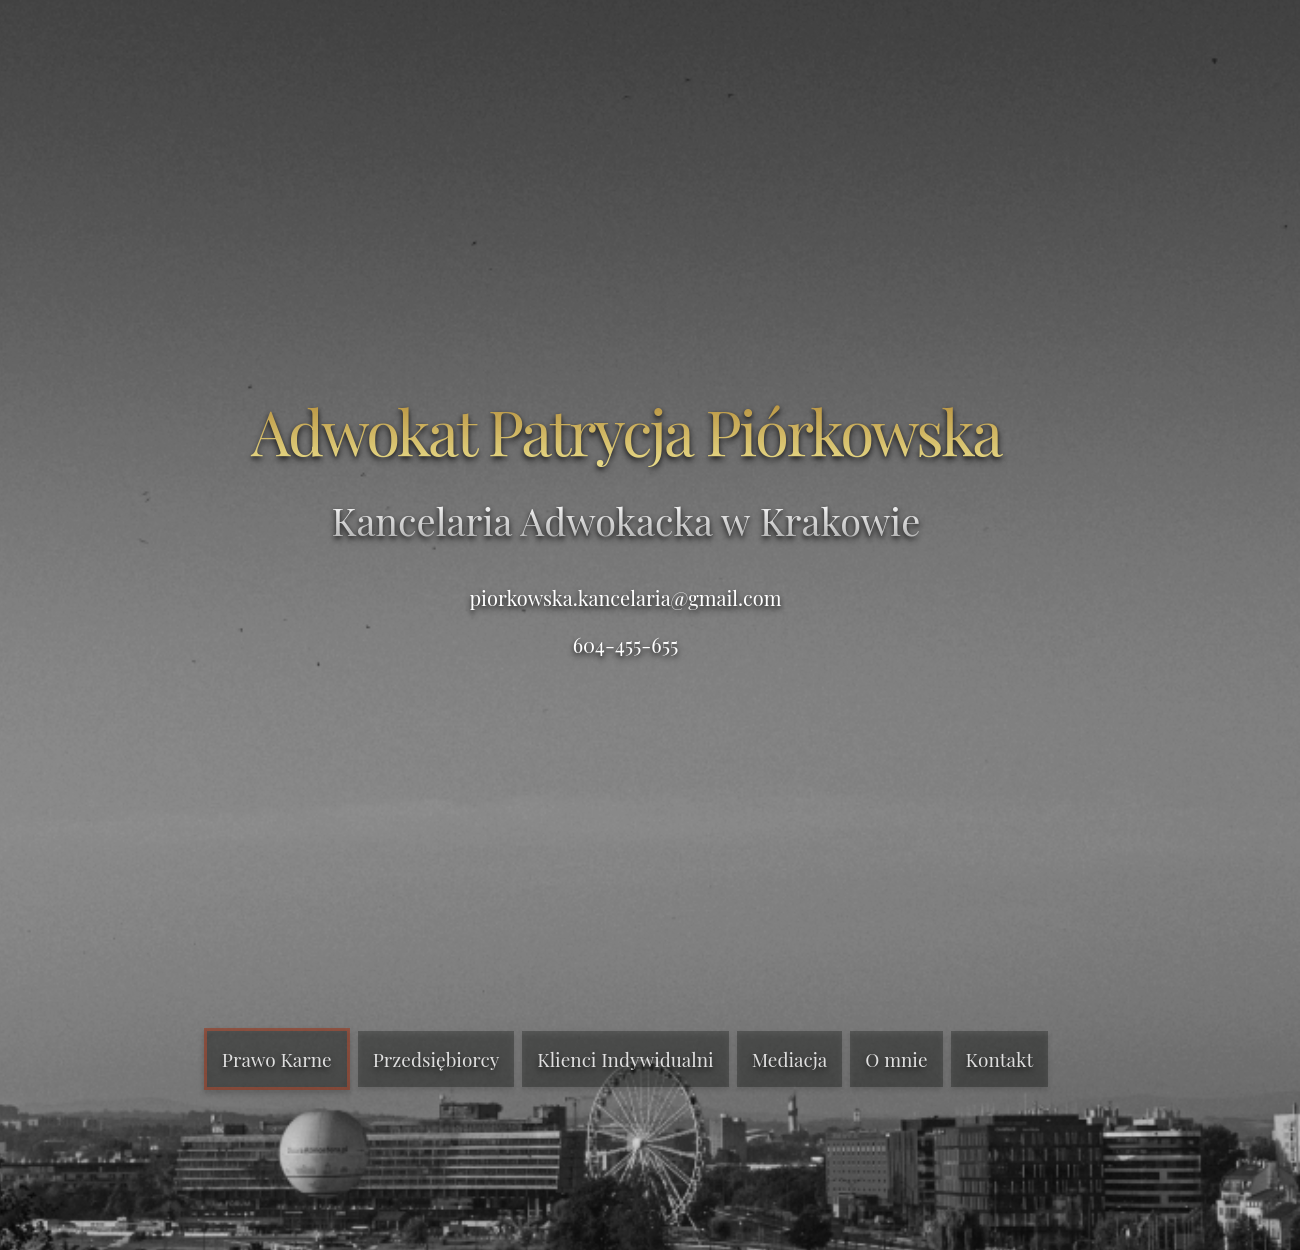 Adwokat Patrycja Piórkowska - design and development of a portoflio landing page businnes card website for attorney at law.